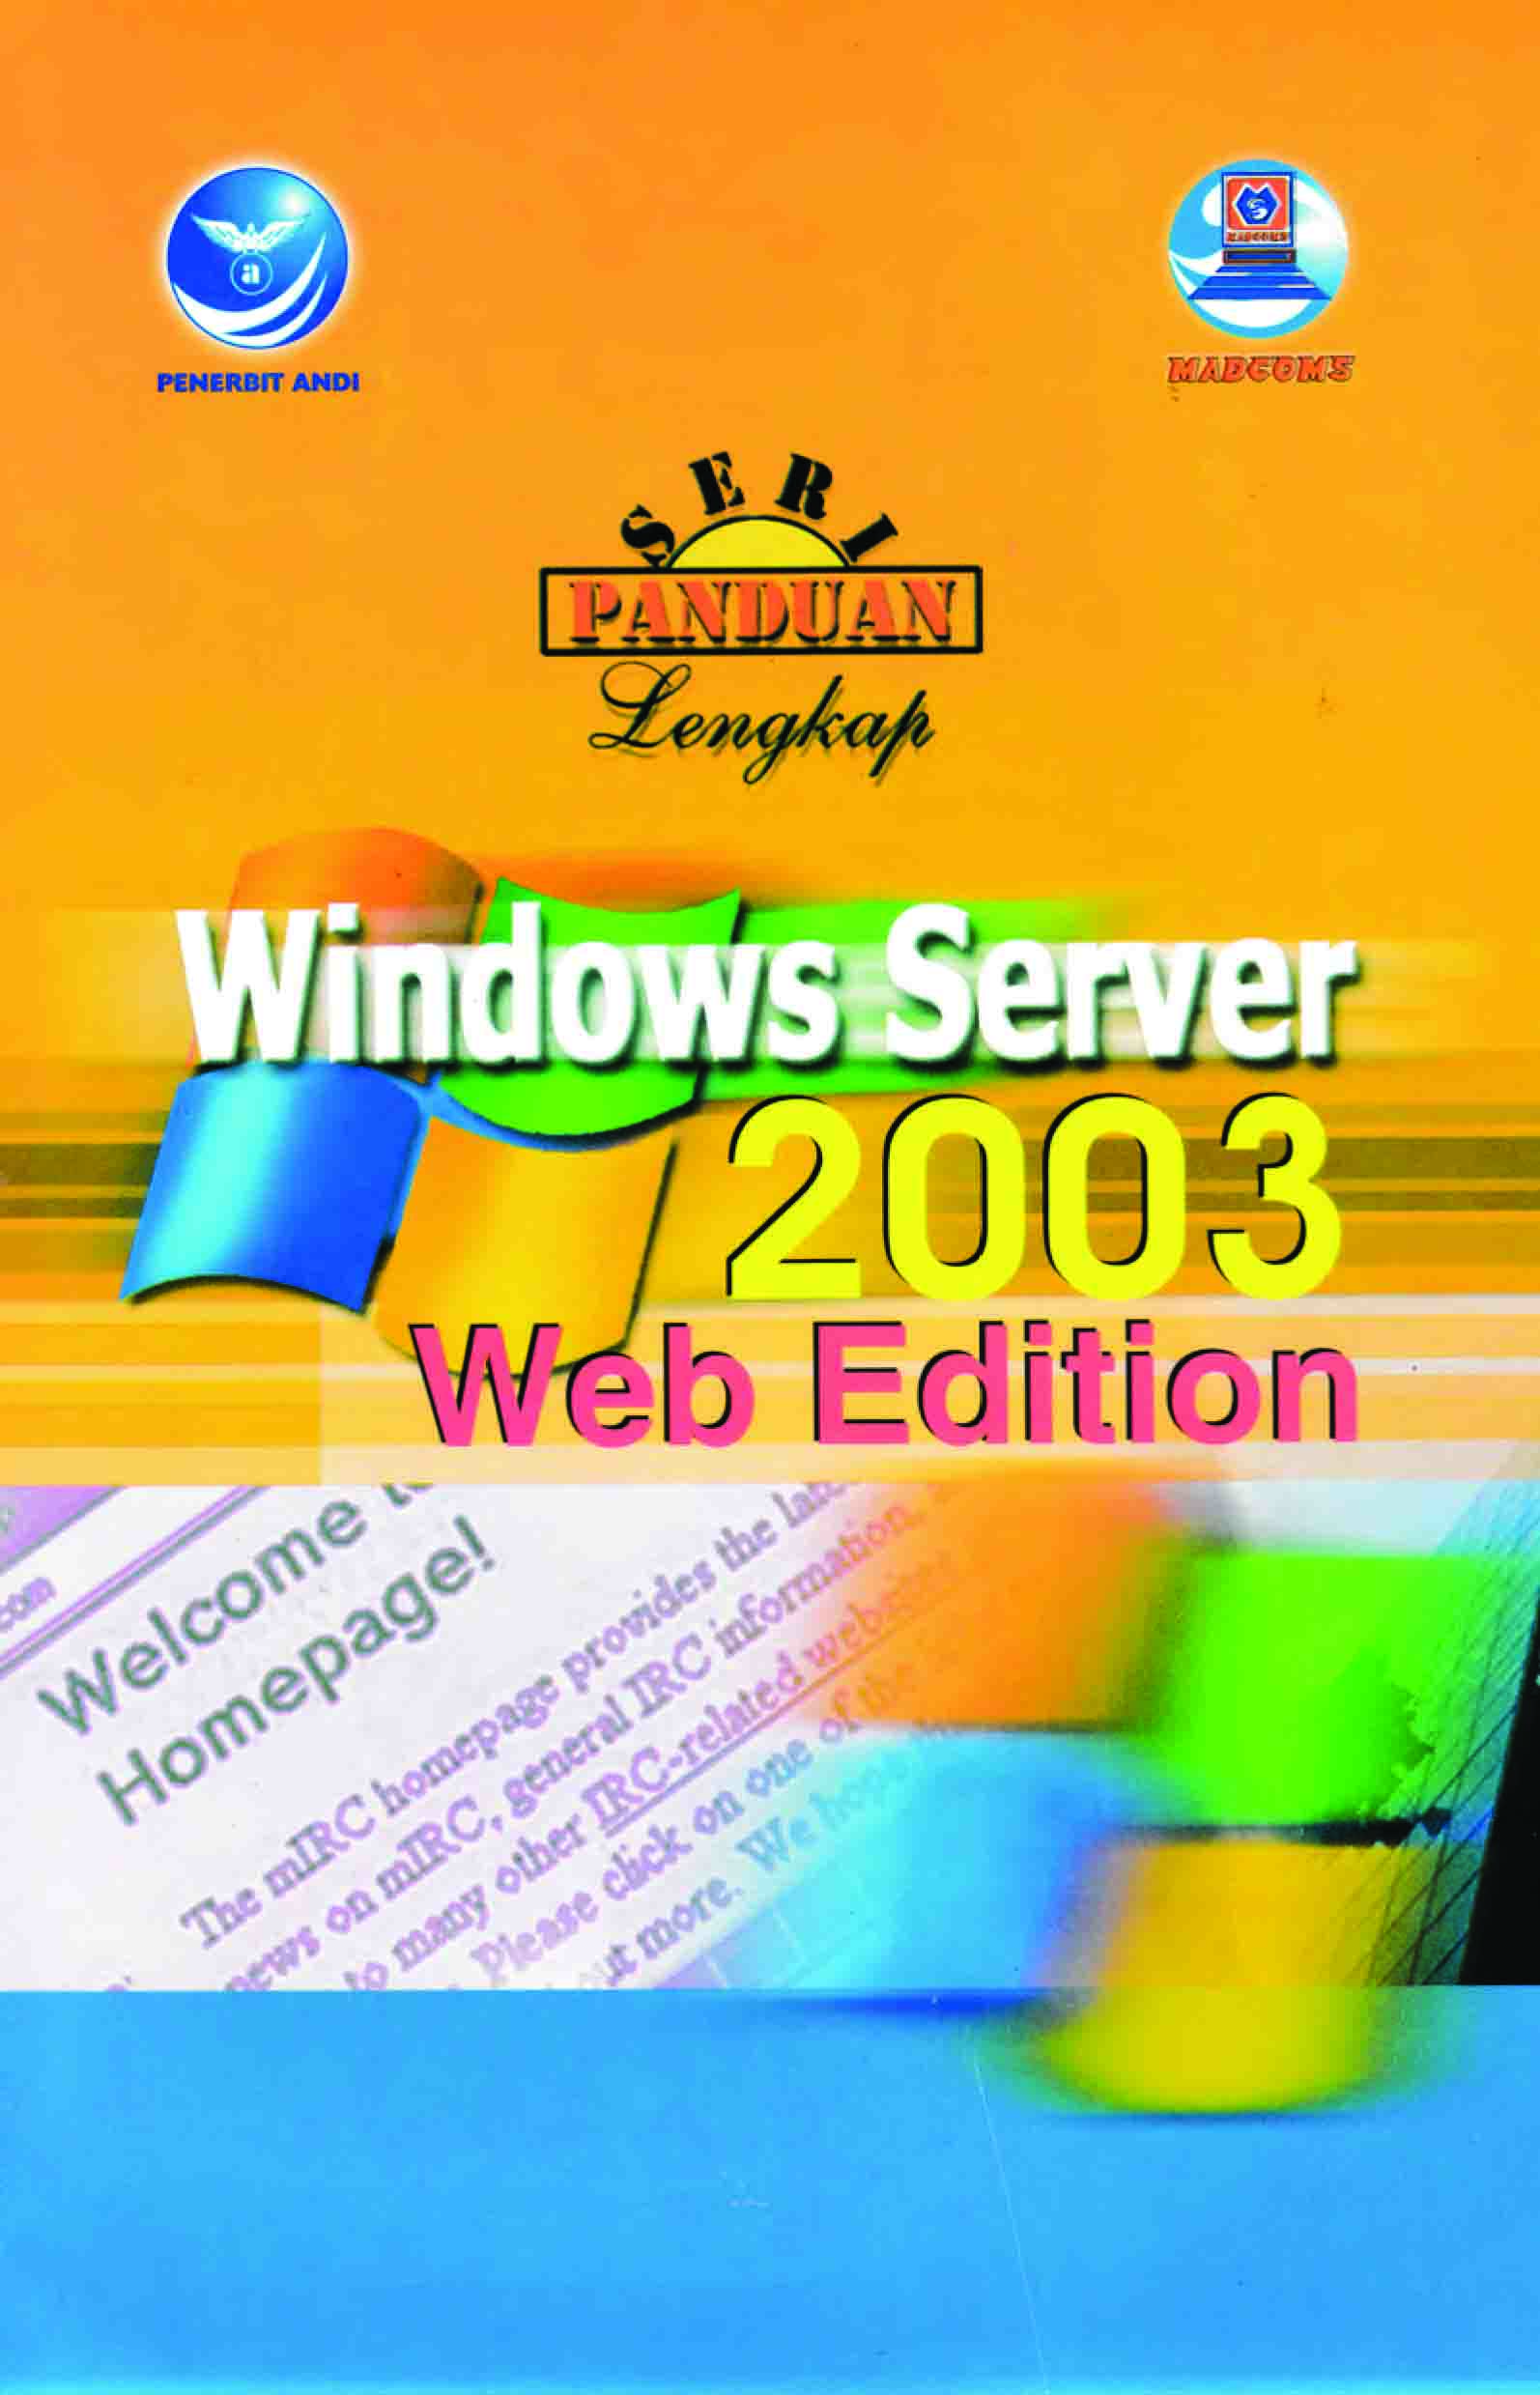 Windows server 2003 web edition [sumber elektronis]